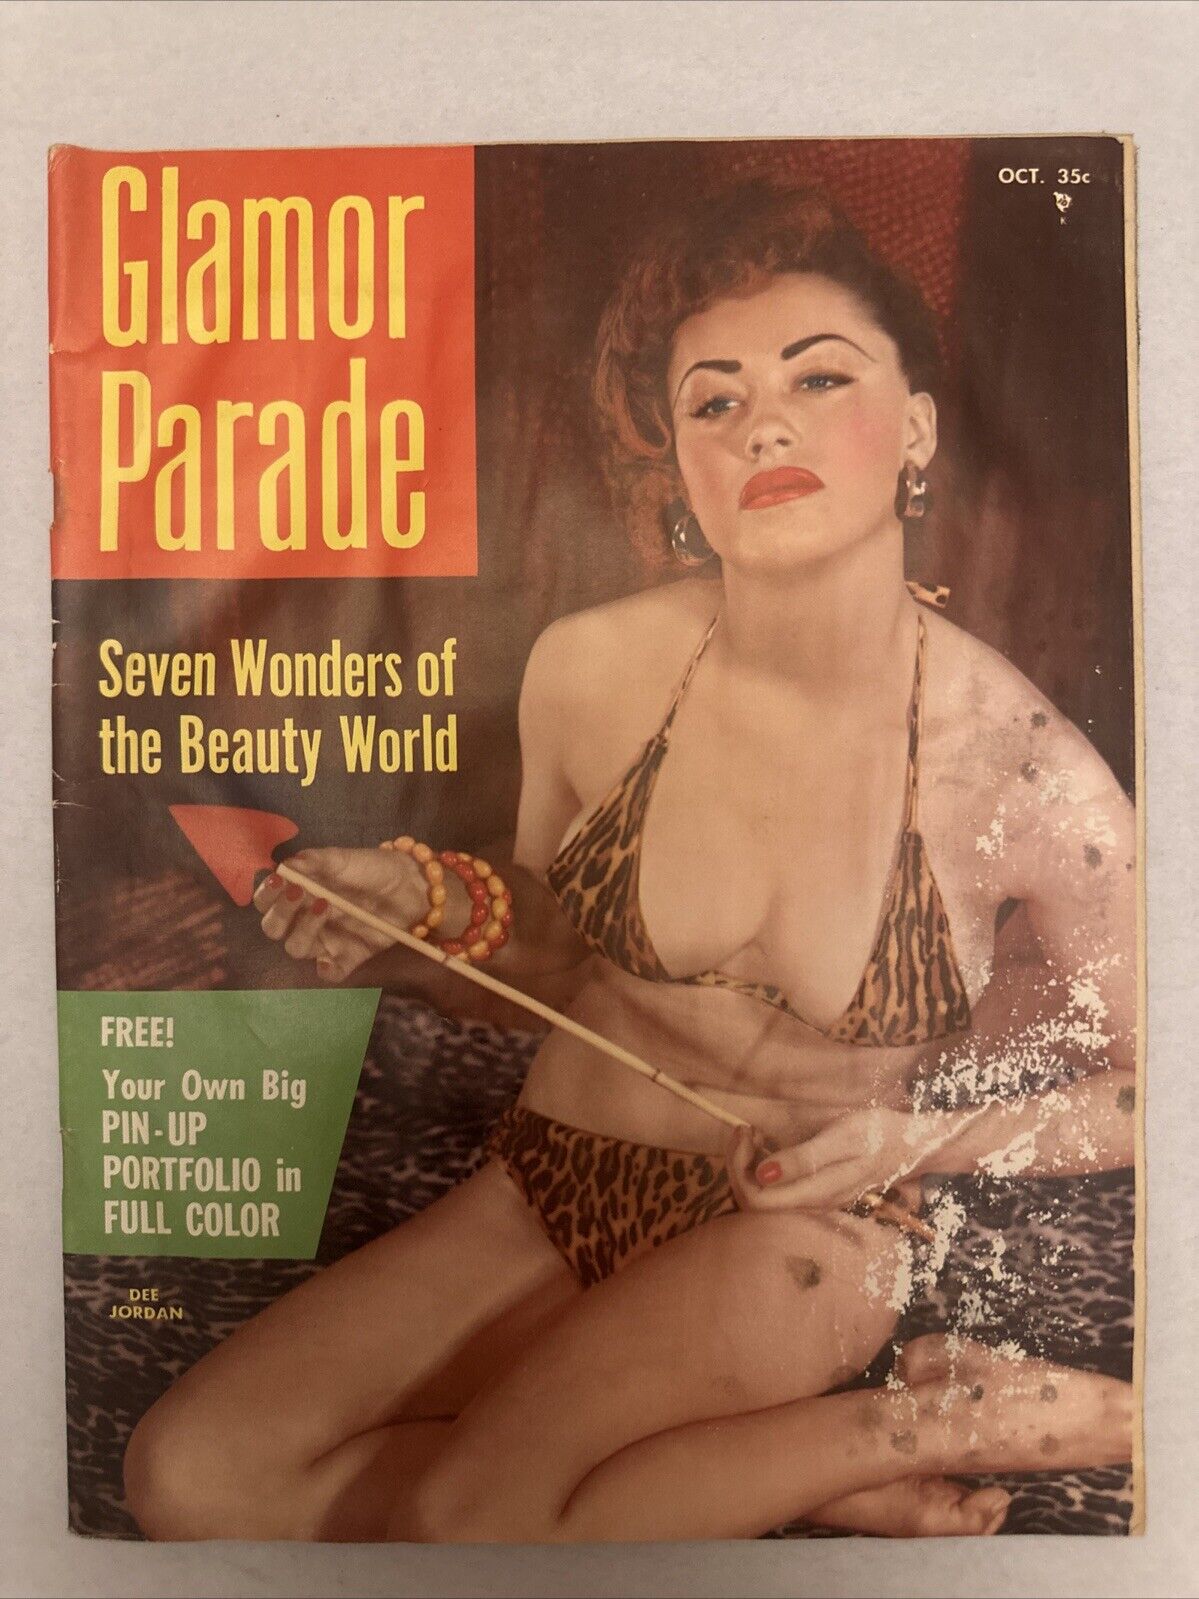 Glamor Parade October 1956 Vol. 1 No. 2 Men\'s Magazine Good Cover Damage